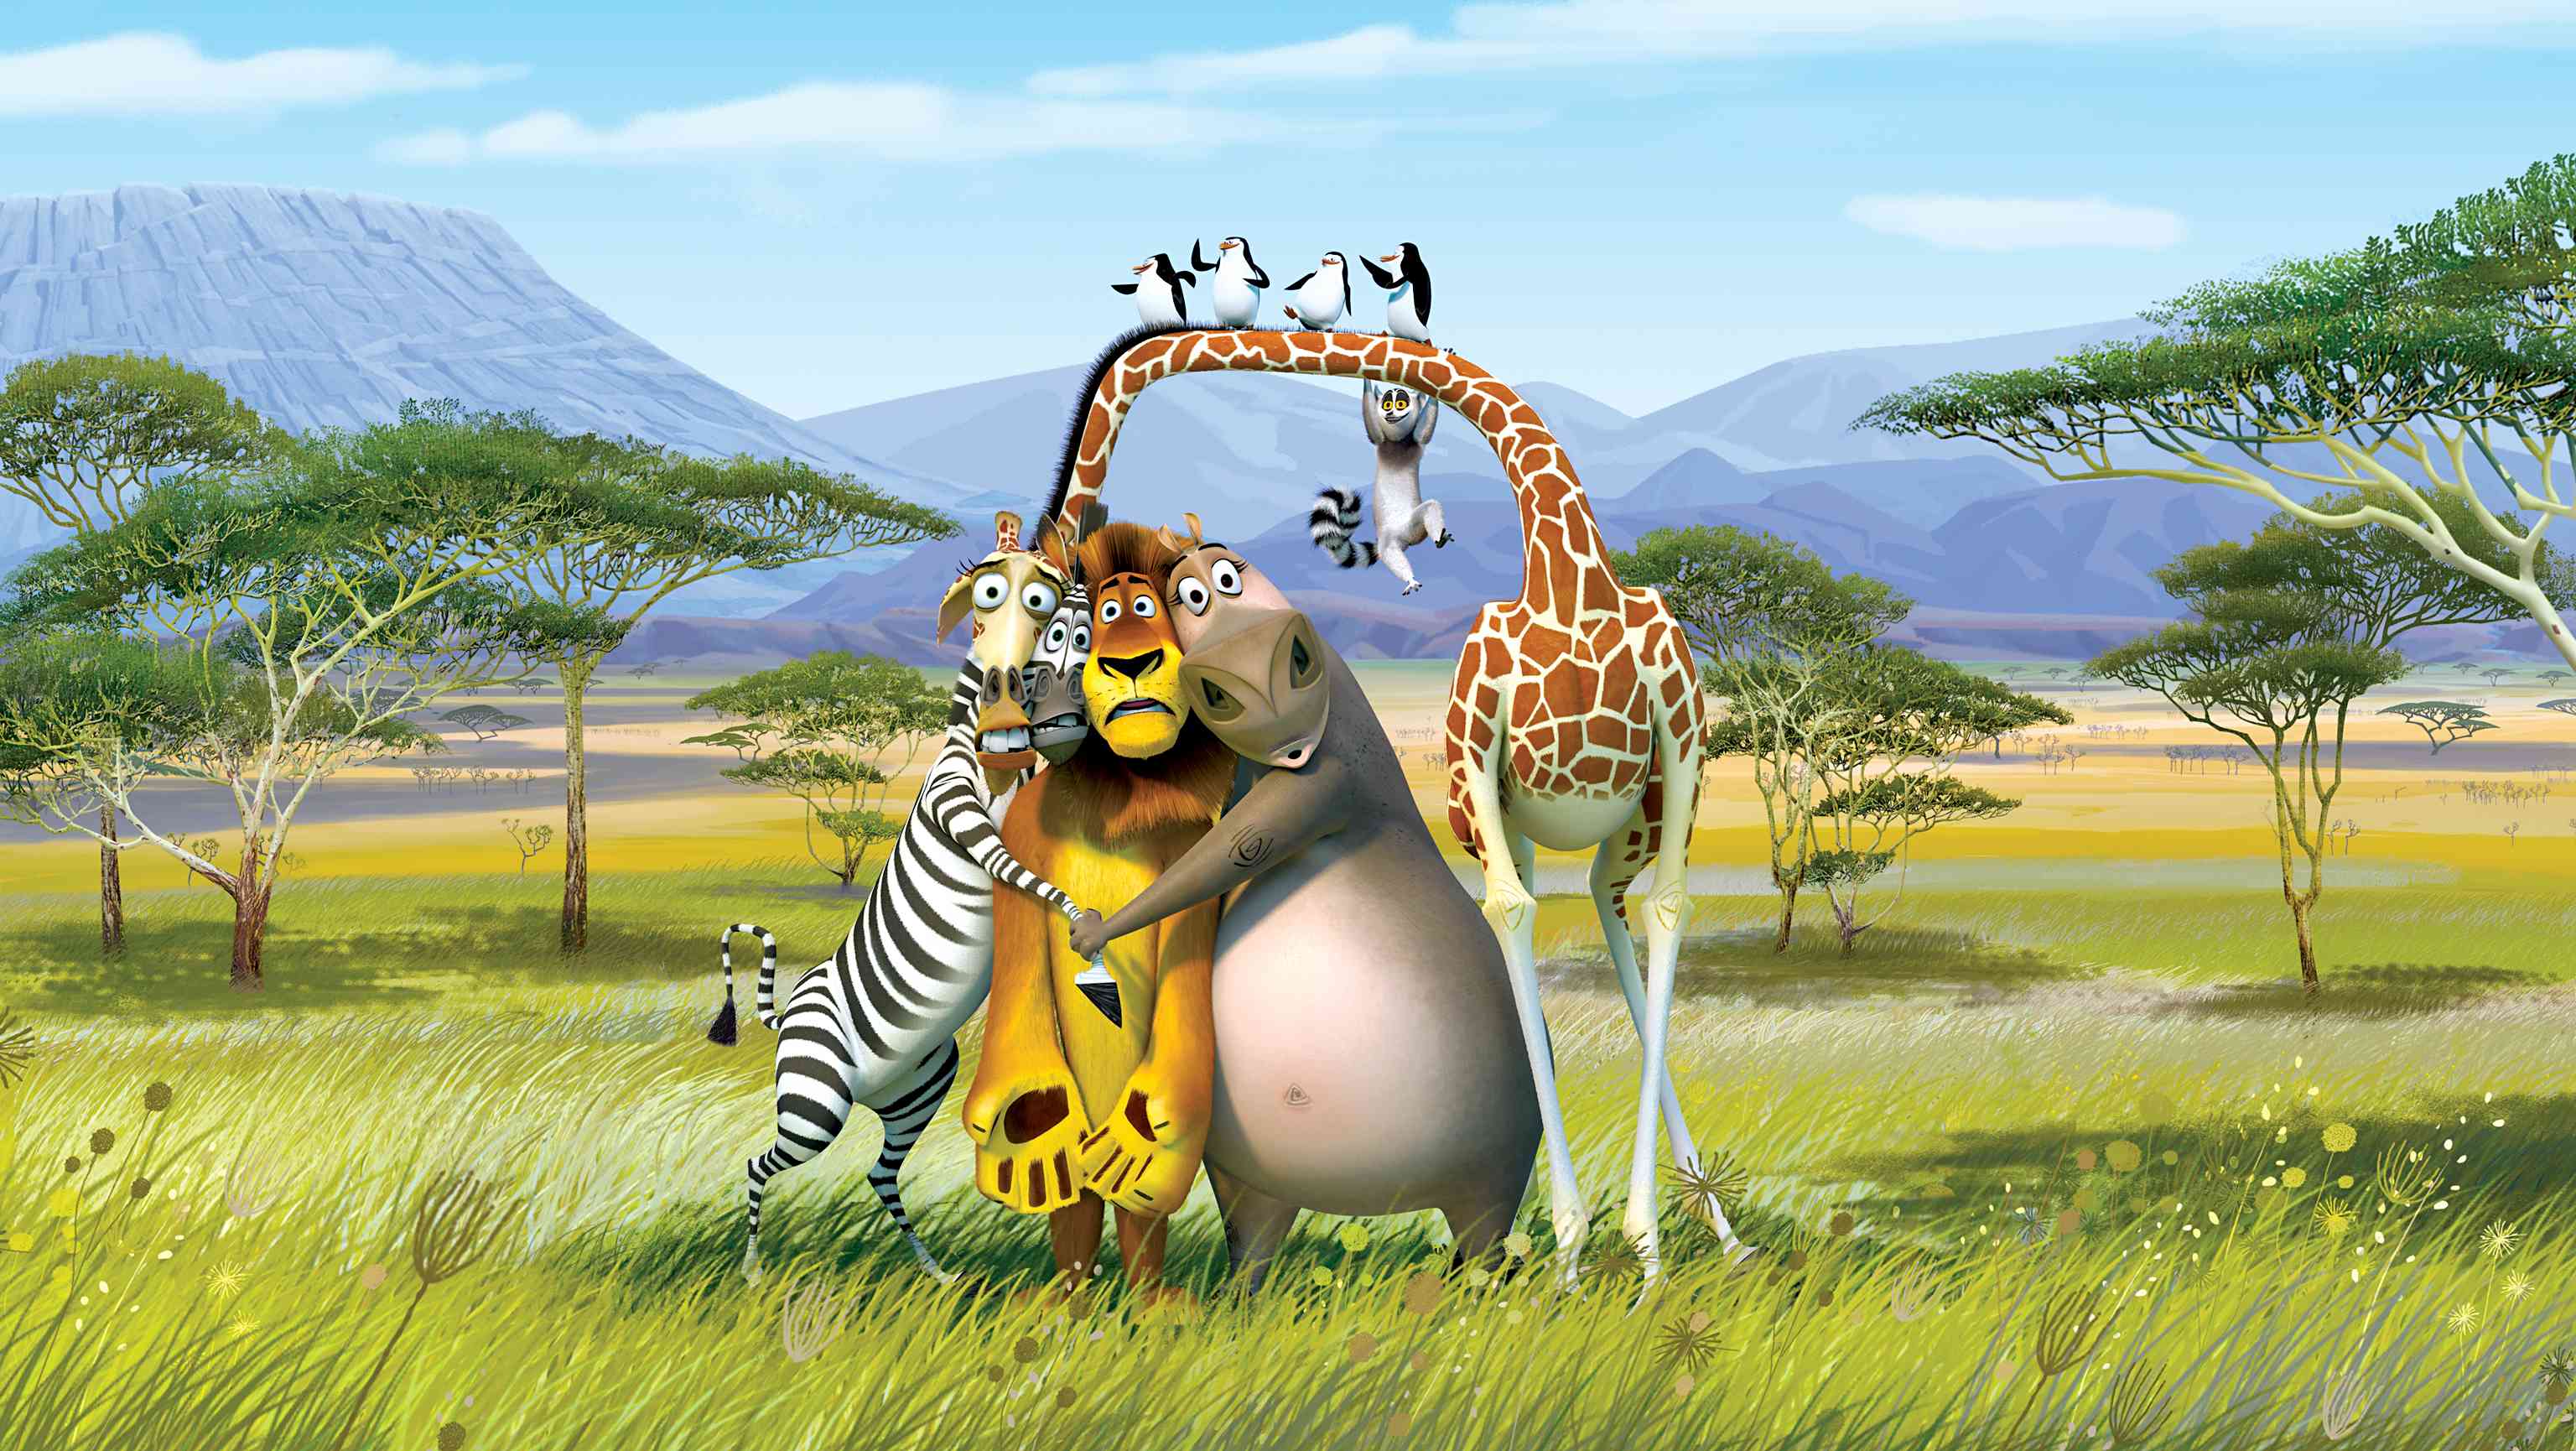 Madagascar: Escape 2 Africa - movie still